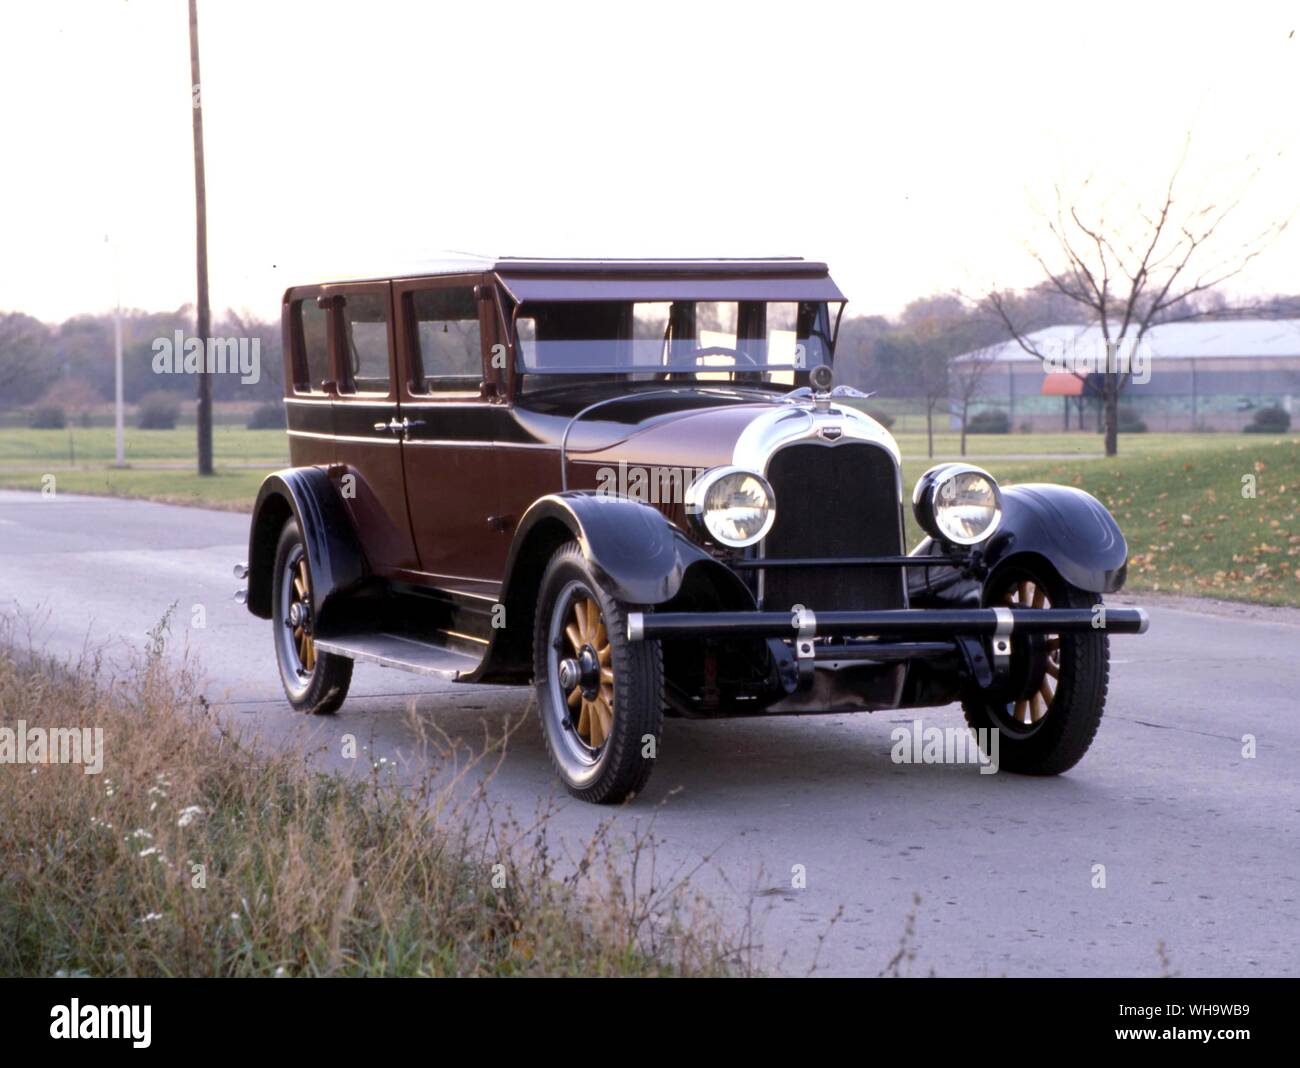 1927 Auburn 6-66/ Wanderer Sedan, bodied by McFarlan, showing how E. L. Cord restyled the Auburn Stock Photo